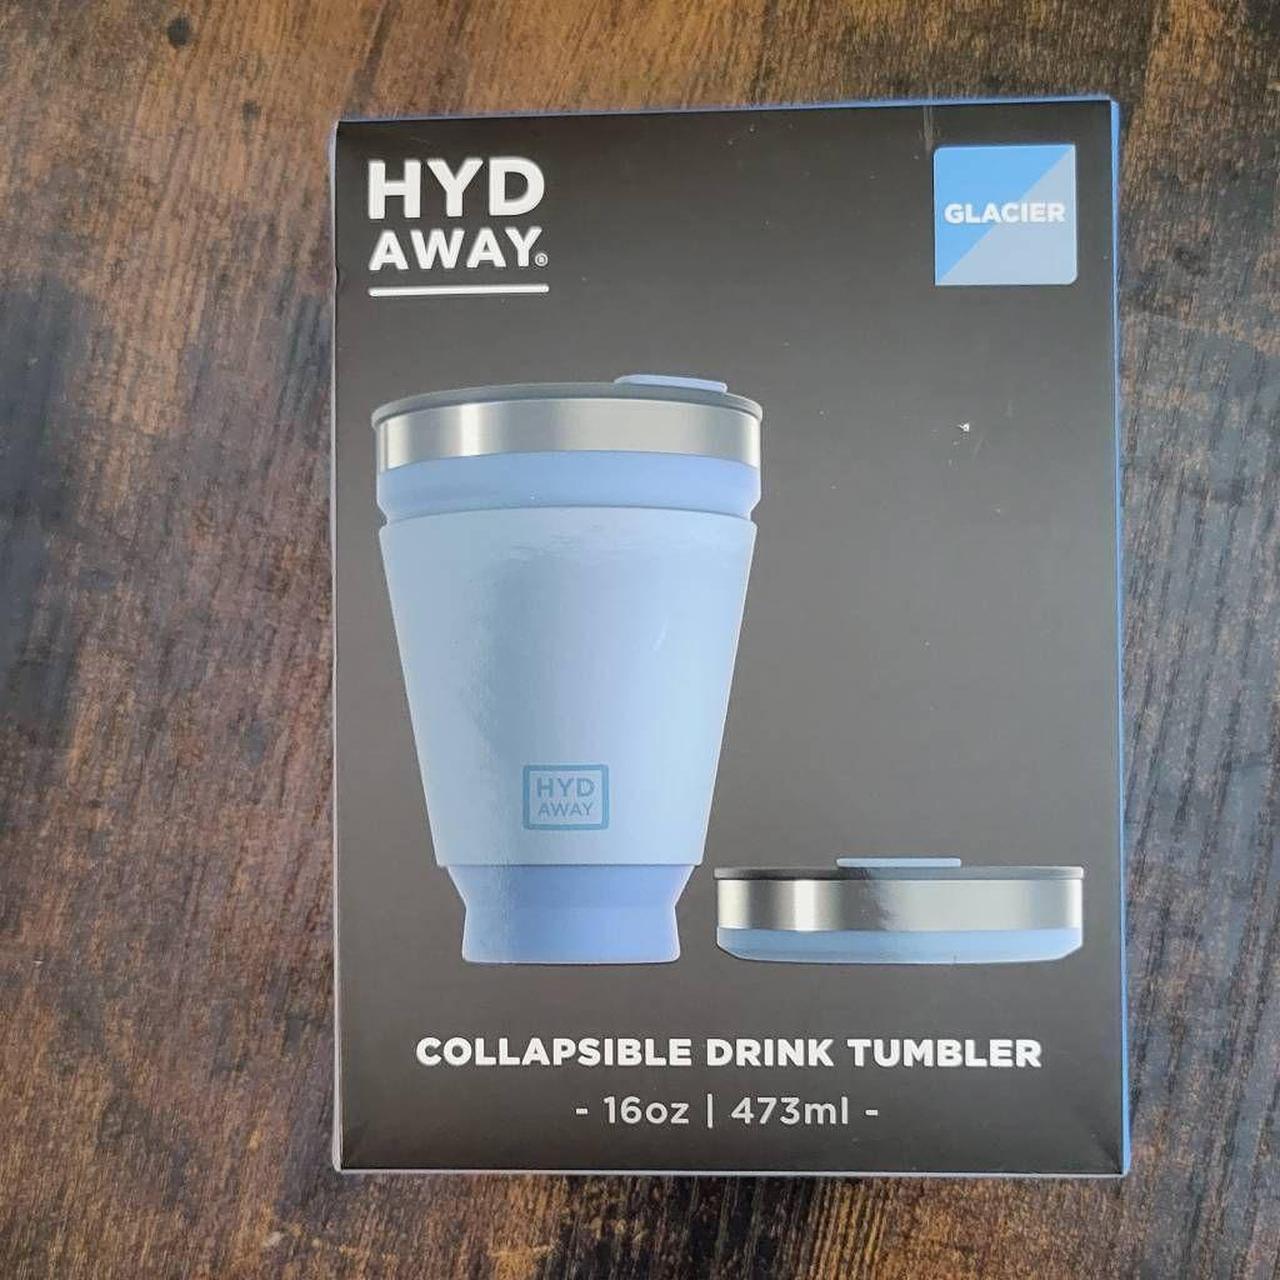 Hydaway Collapsible Drink Tumbler Glacier 473ml